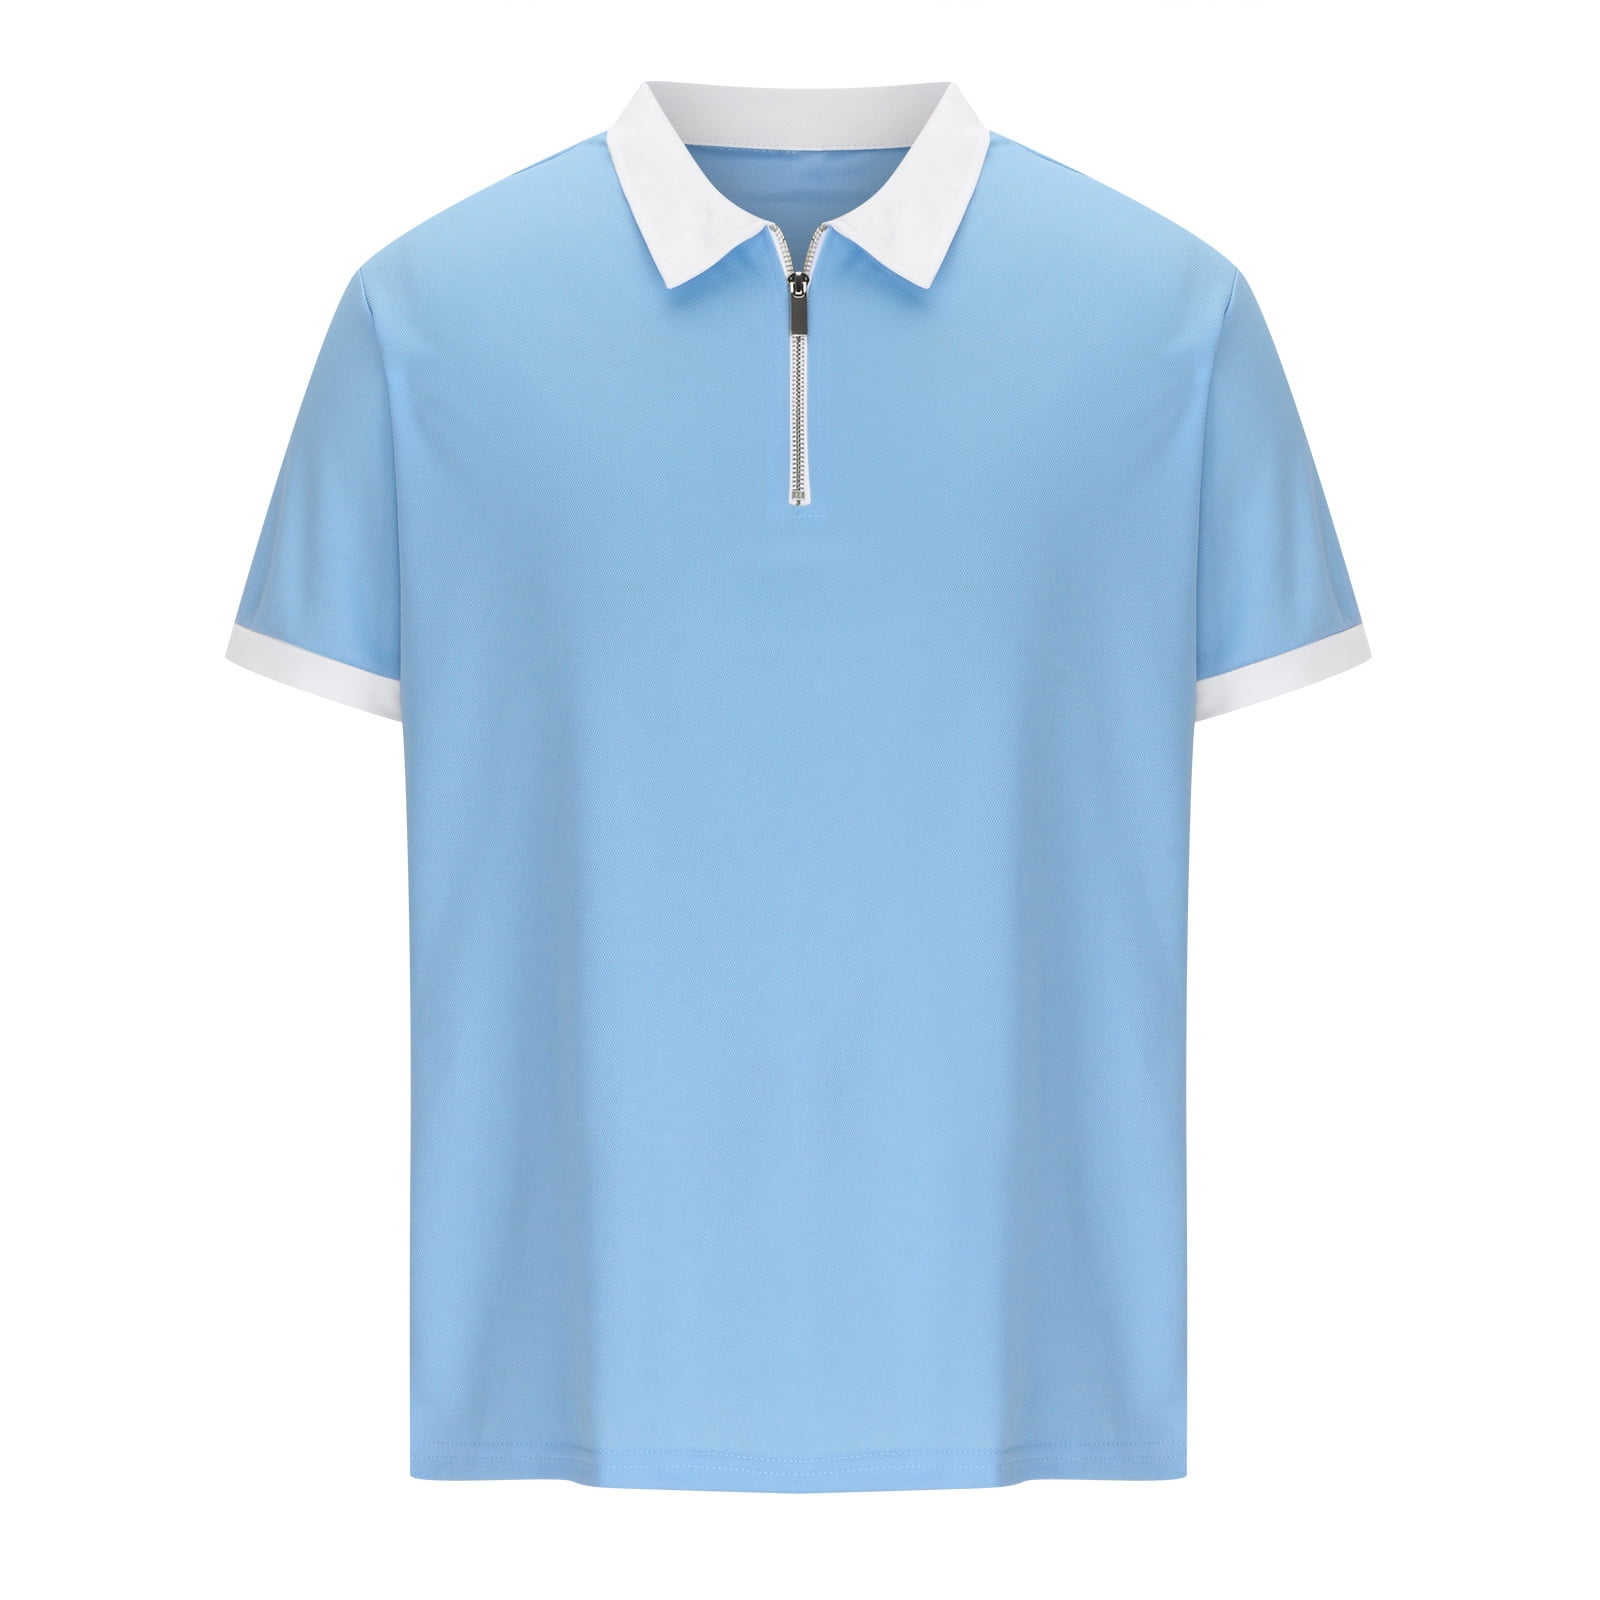 YYDGH Men's Zipper Polo Shirt Casual Knit Short Sleeve Polo T Shirt Classic  Fit Shirts Blue XXXL